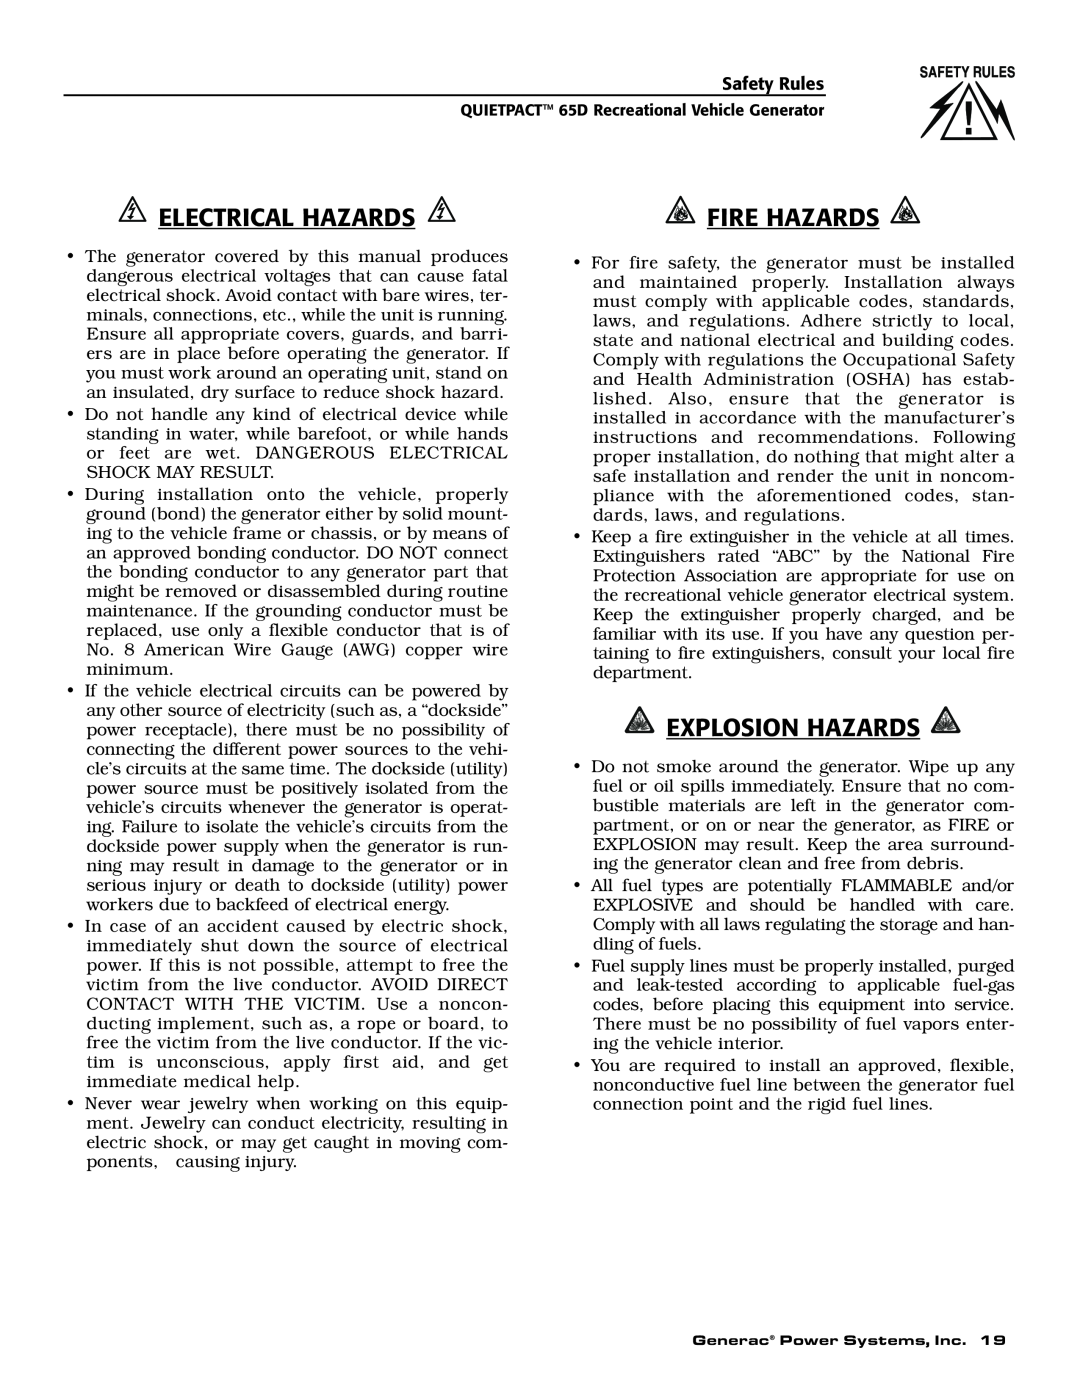 Generac 004614-1 owner manual Electrical Hazards, Explosion Hazards, Fire Hazards 